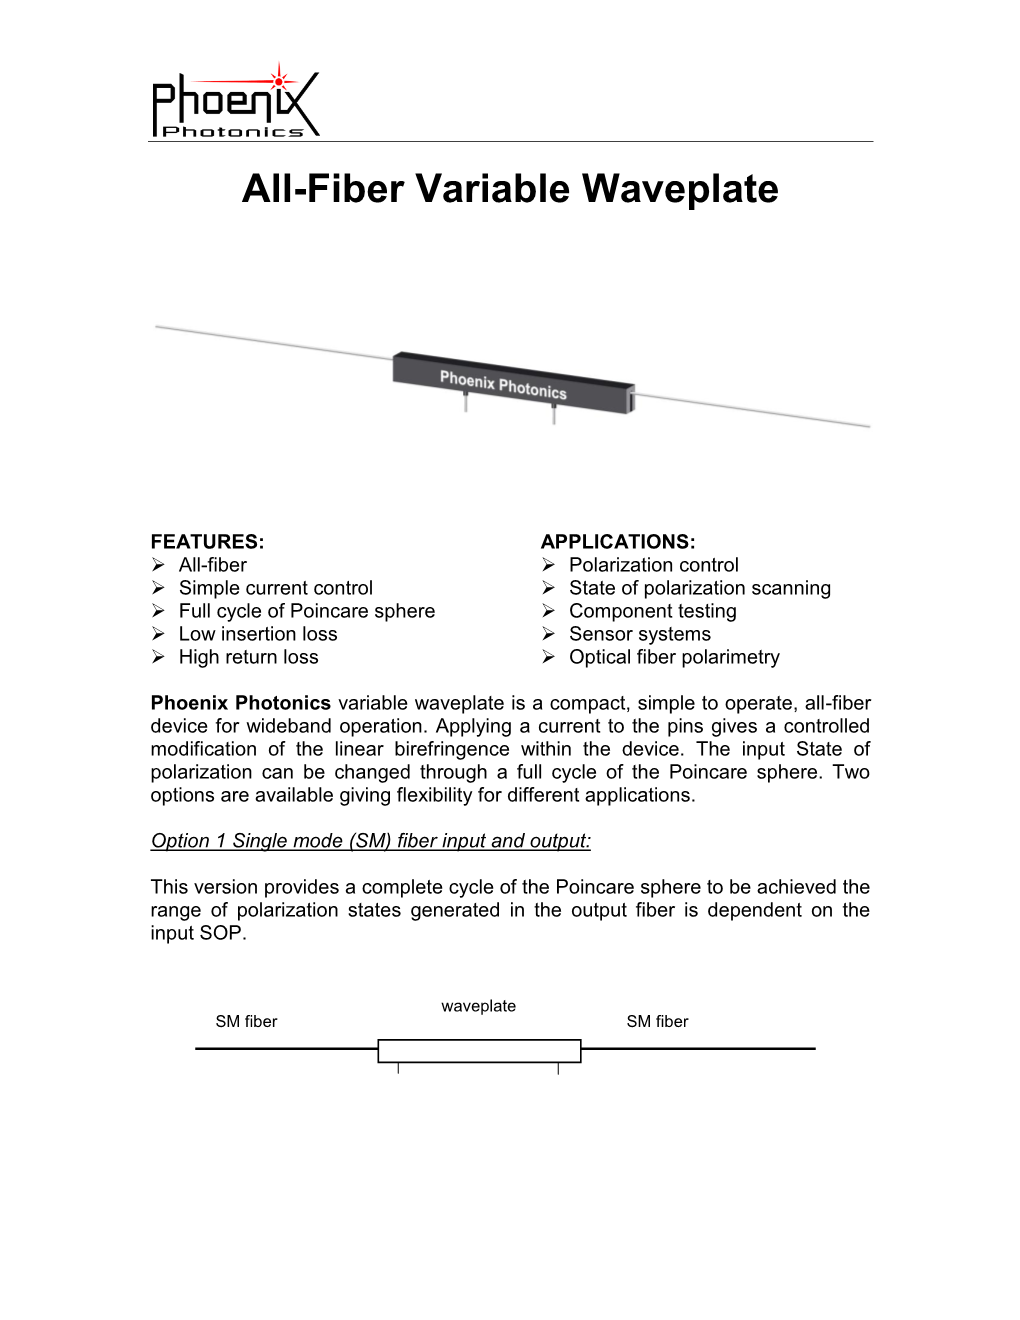 Fiber Optic Variable Waveplate